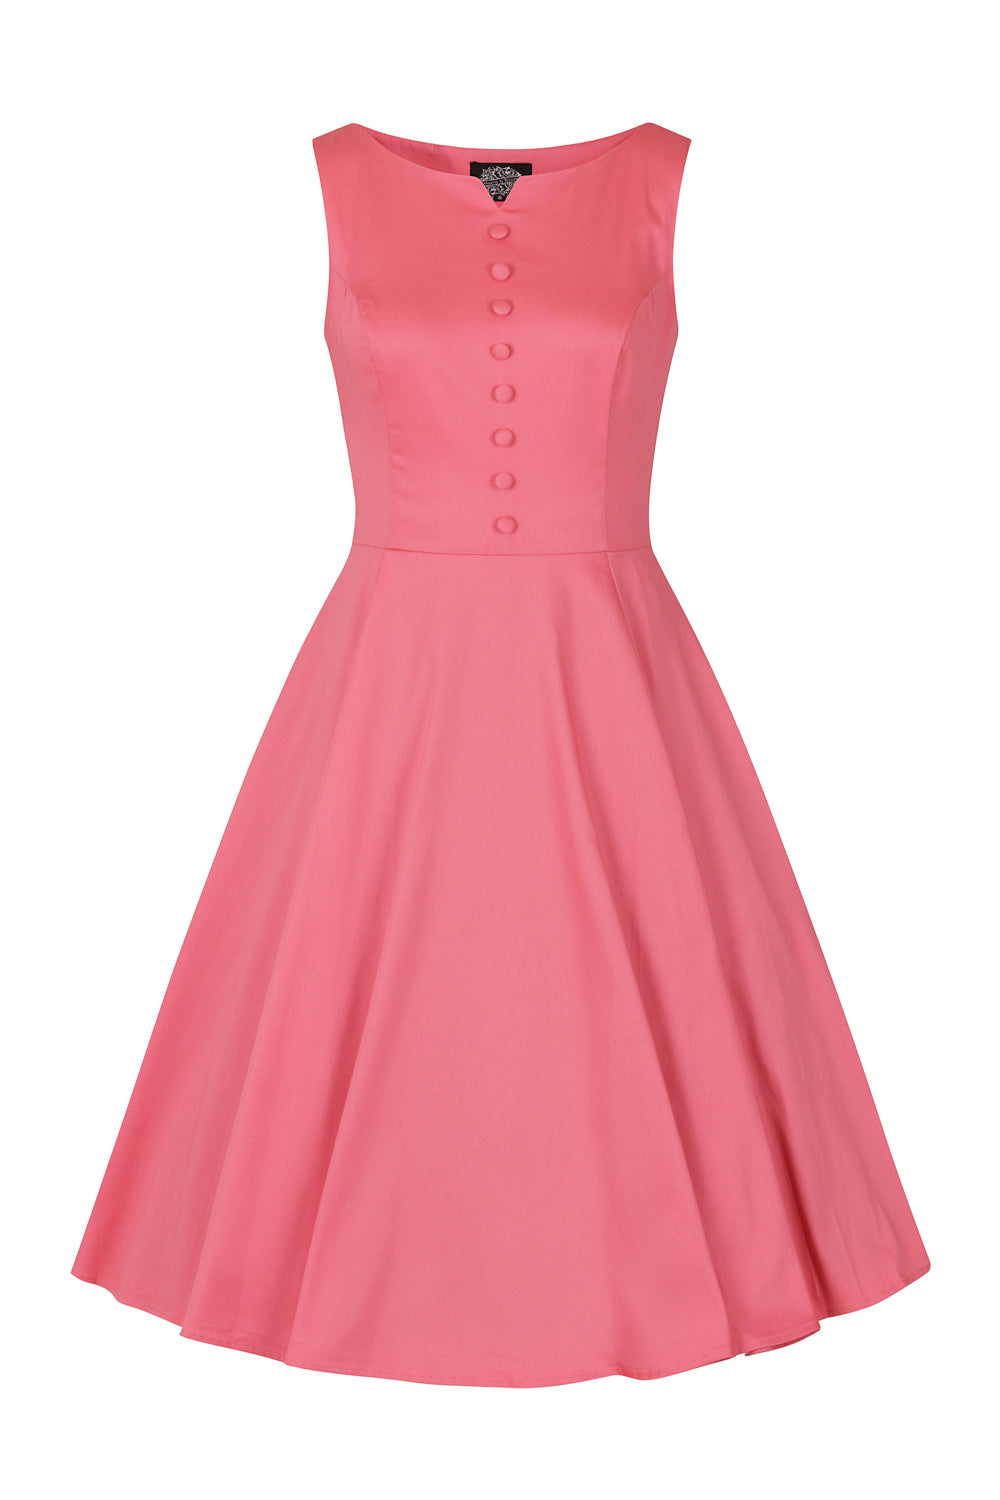 Coral Pink Swing Dress